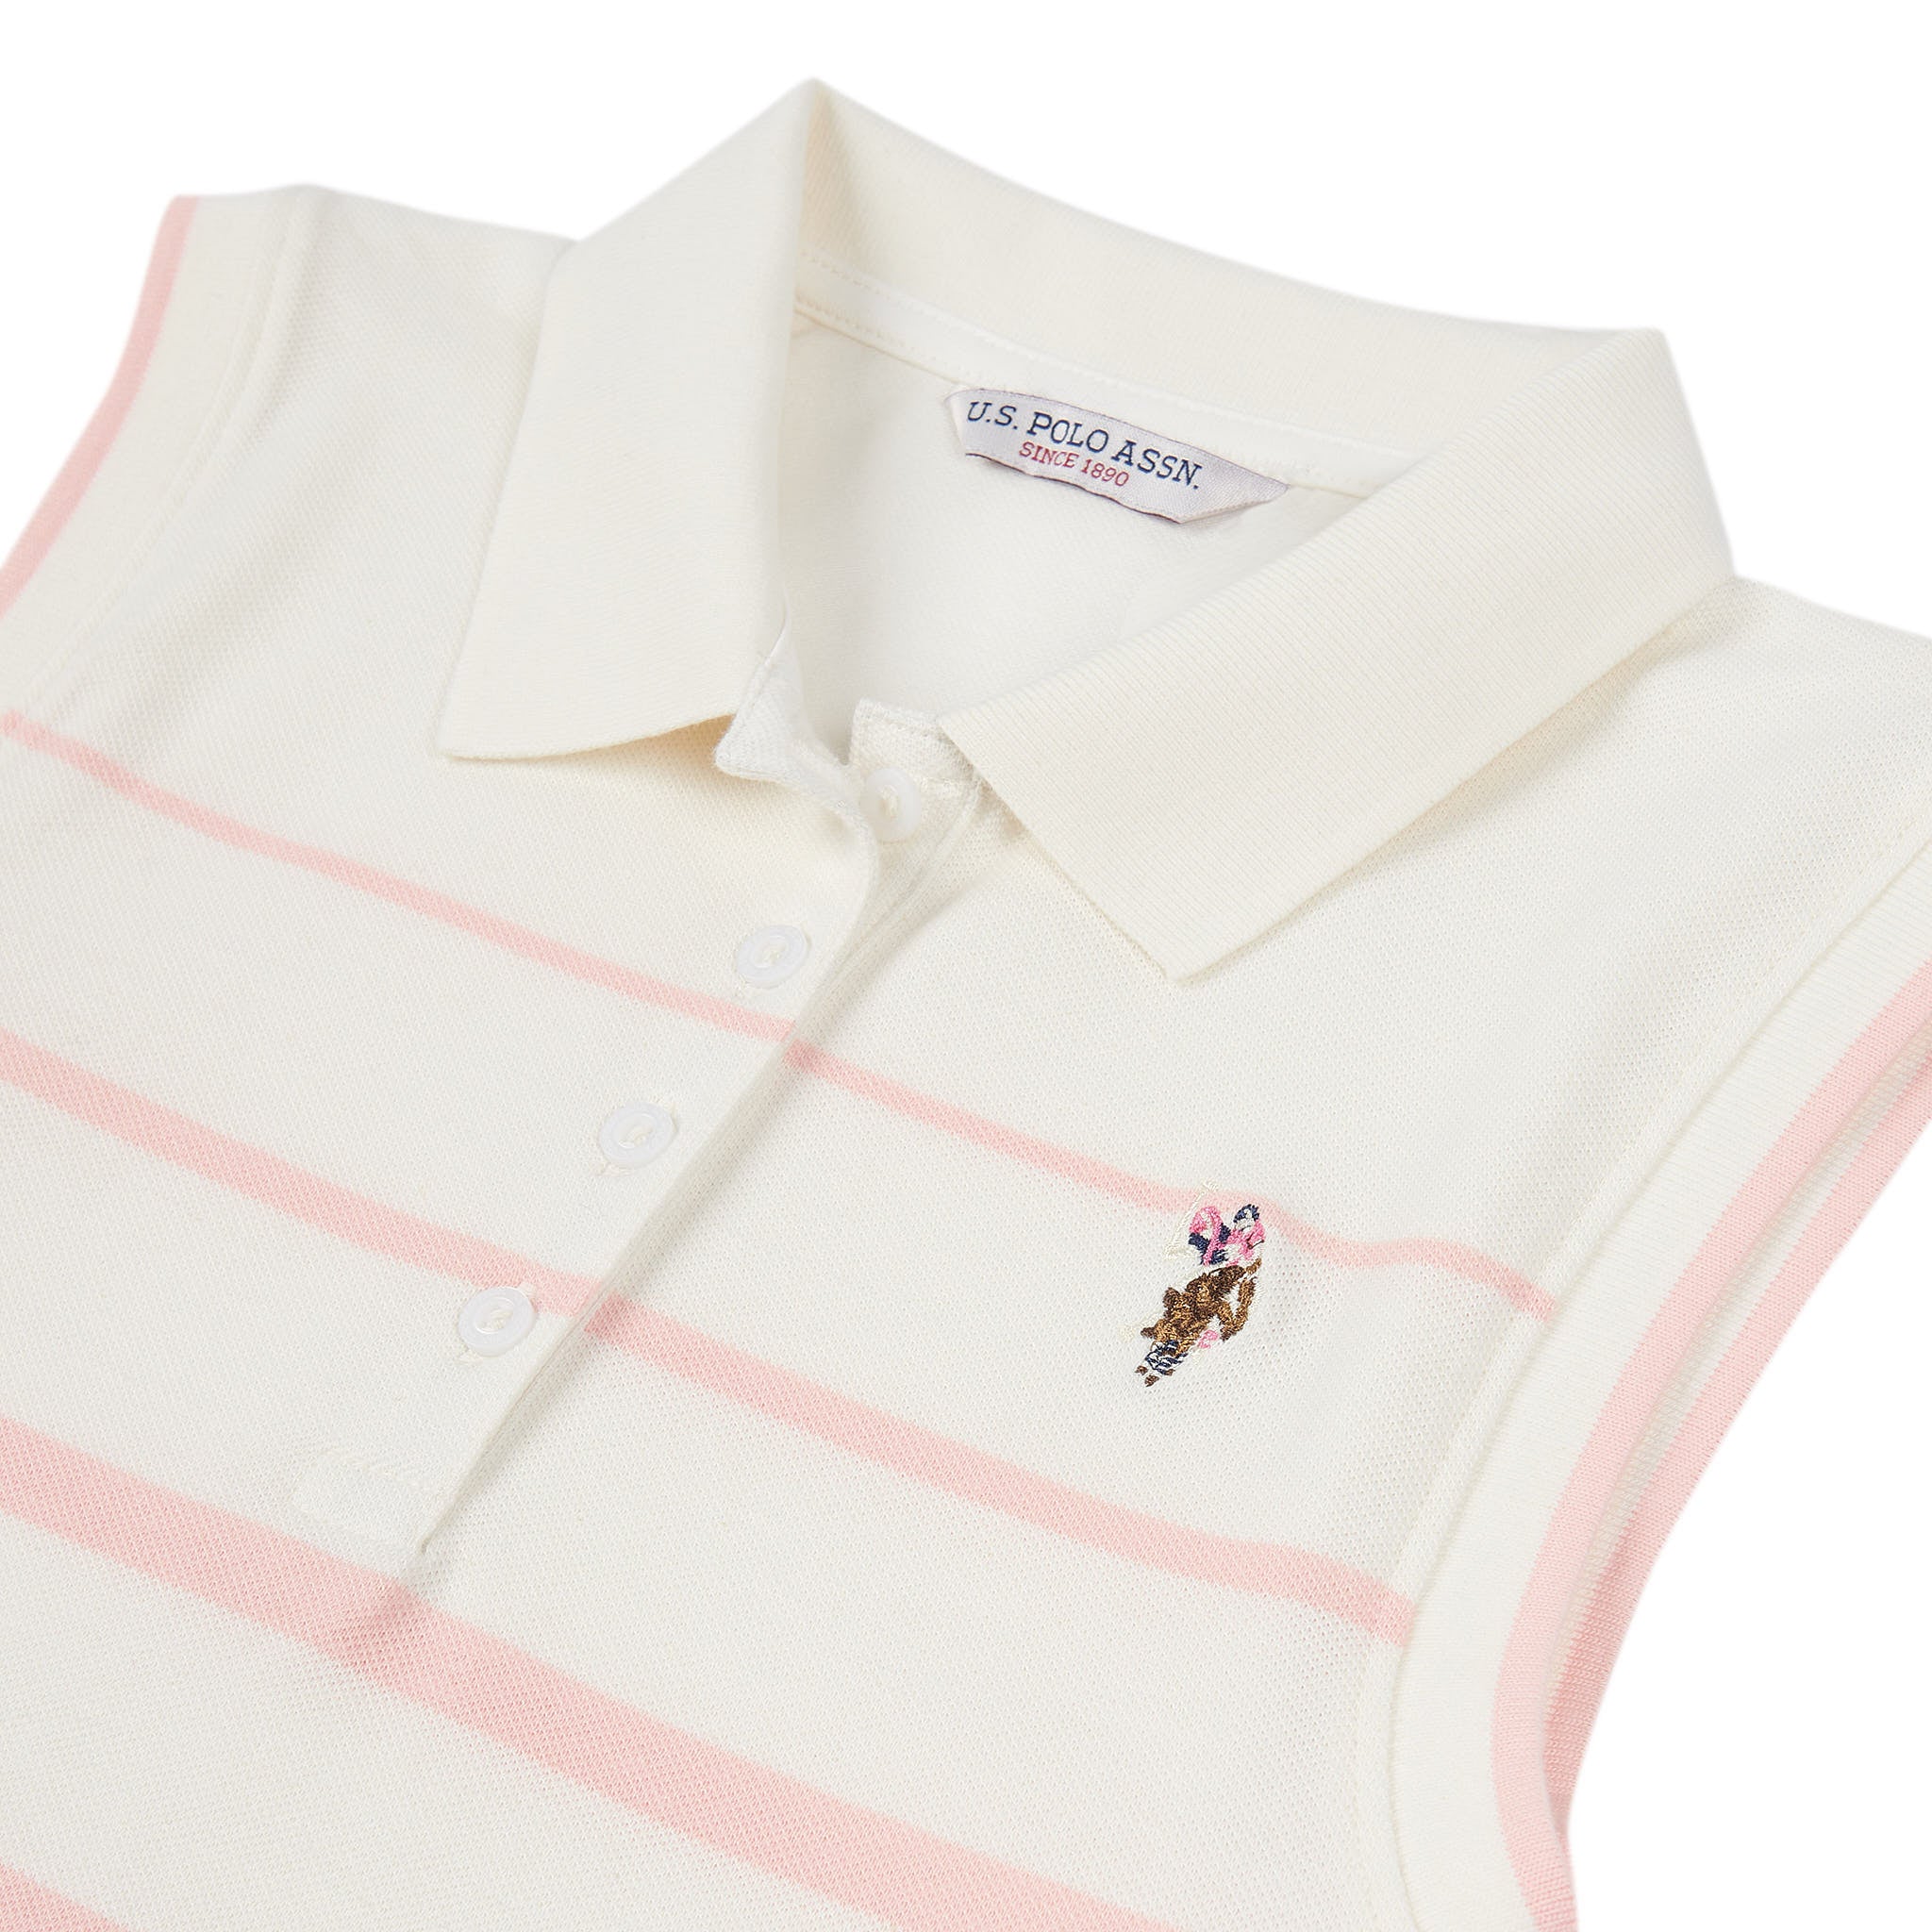 Womens Stripe Sleeveless Polo Shirt in Marshmallow